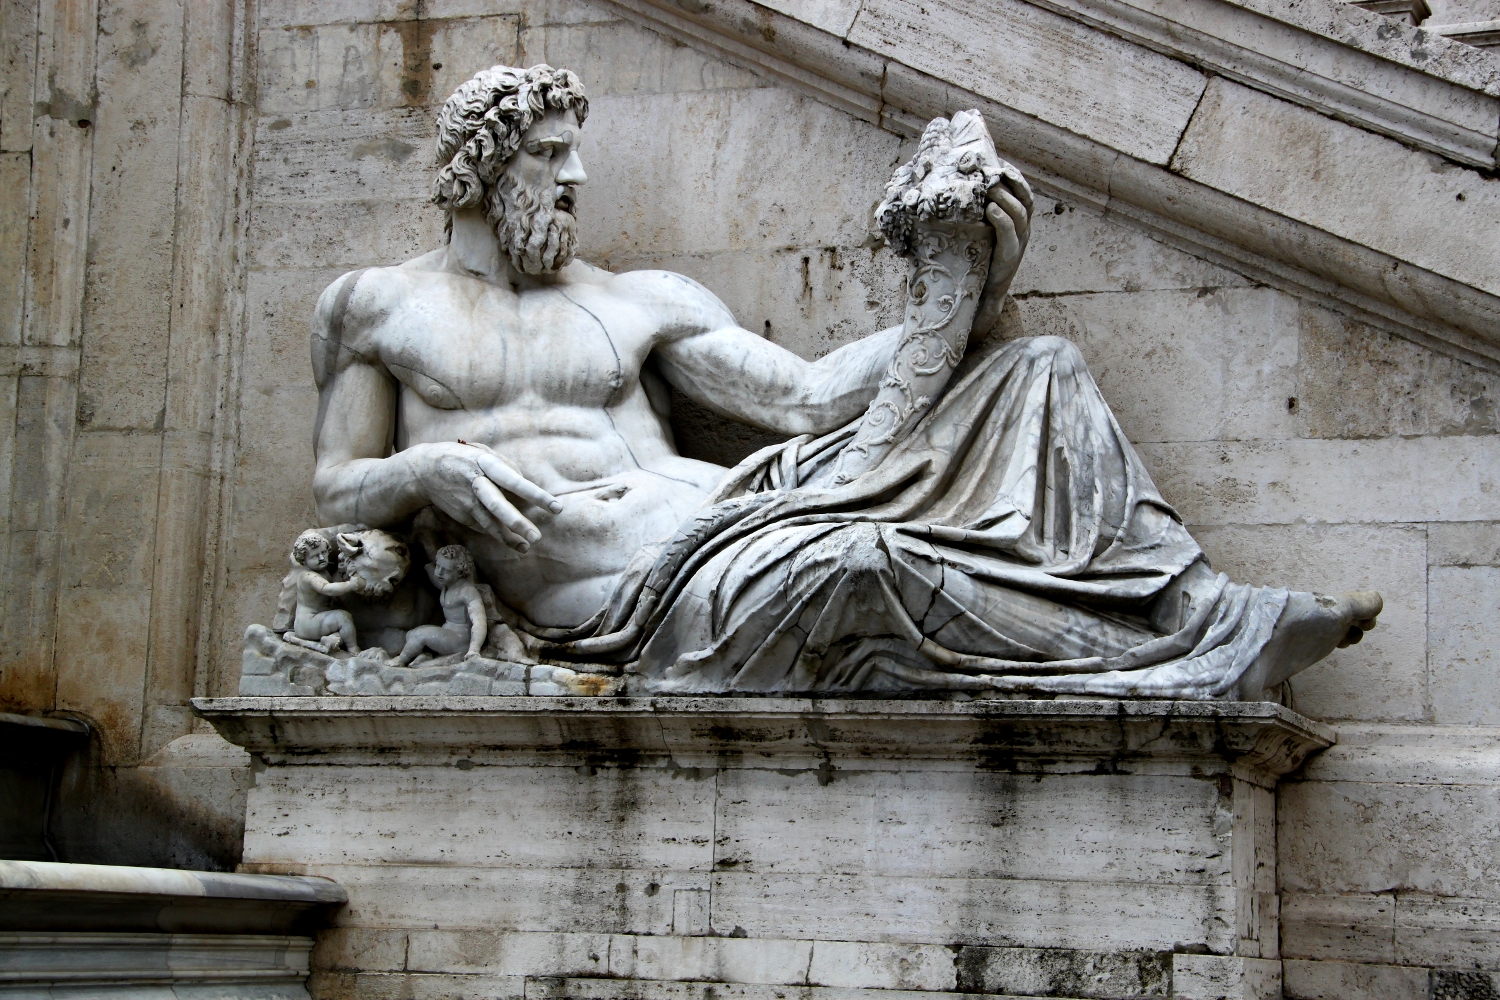 Statue seen in Rome